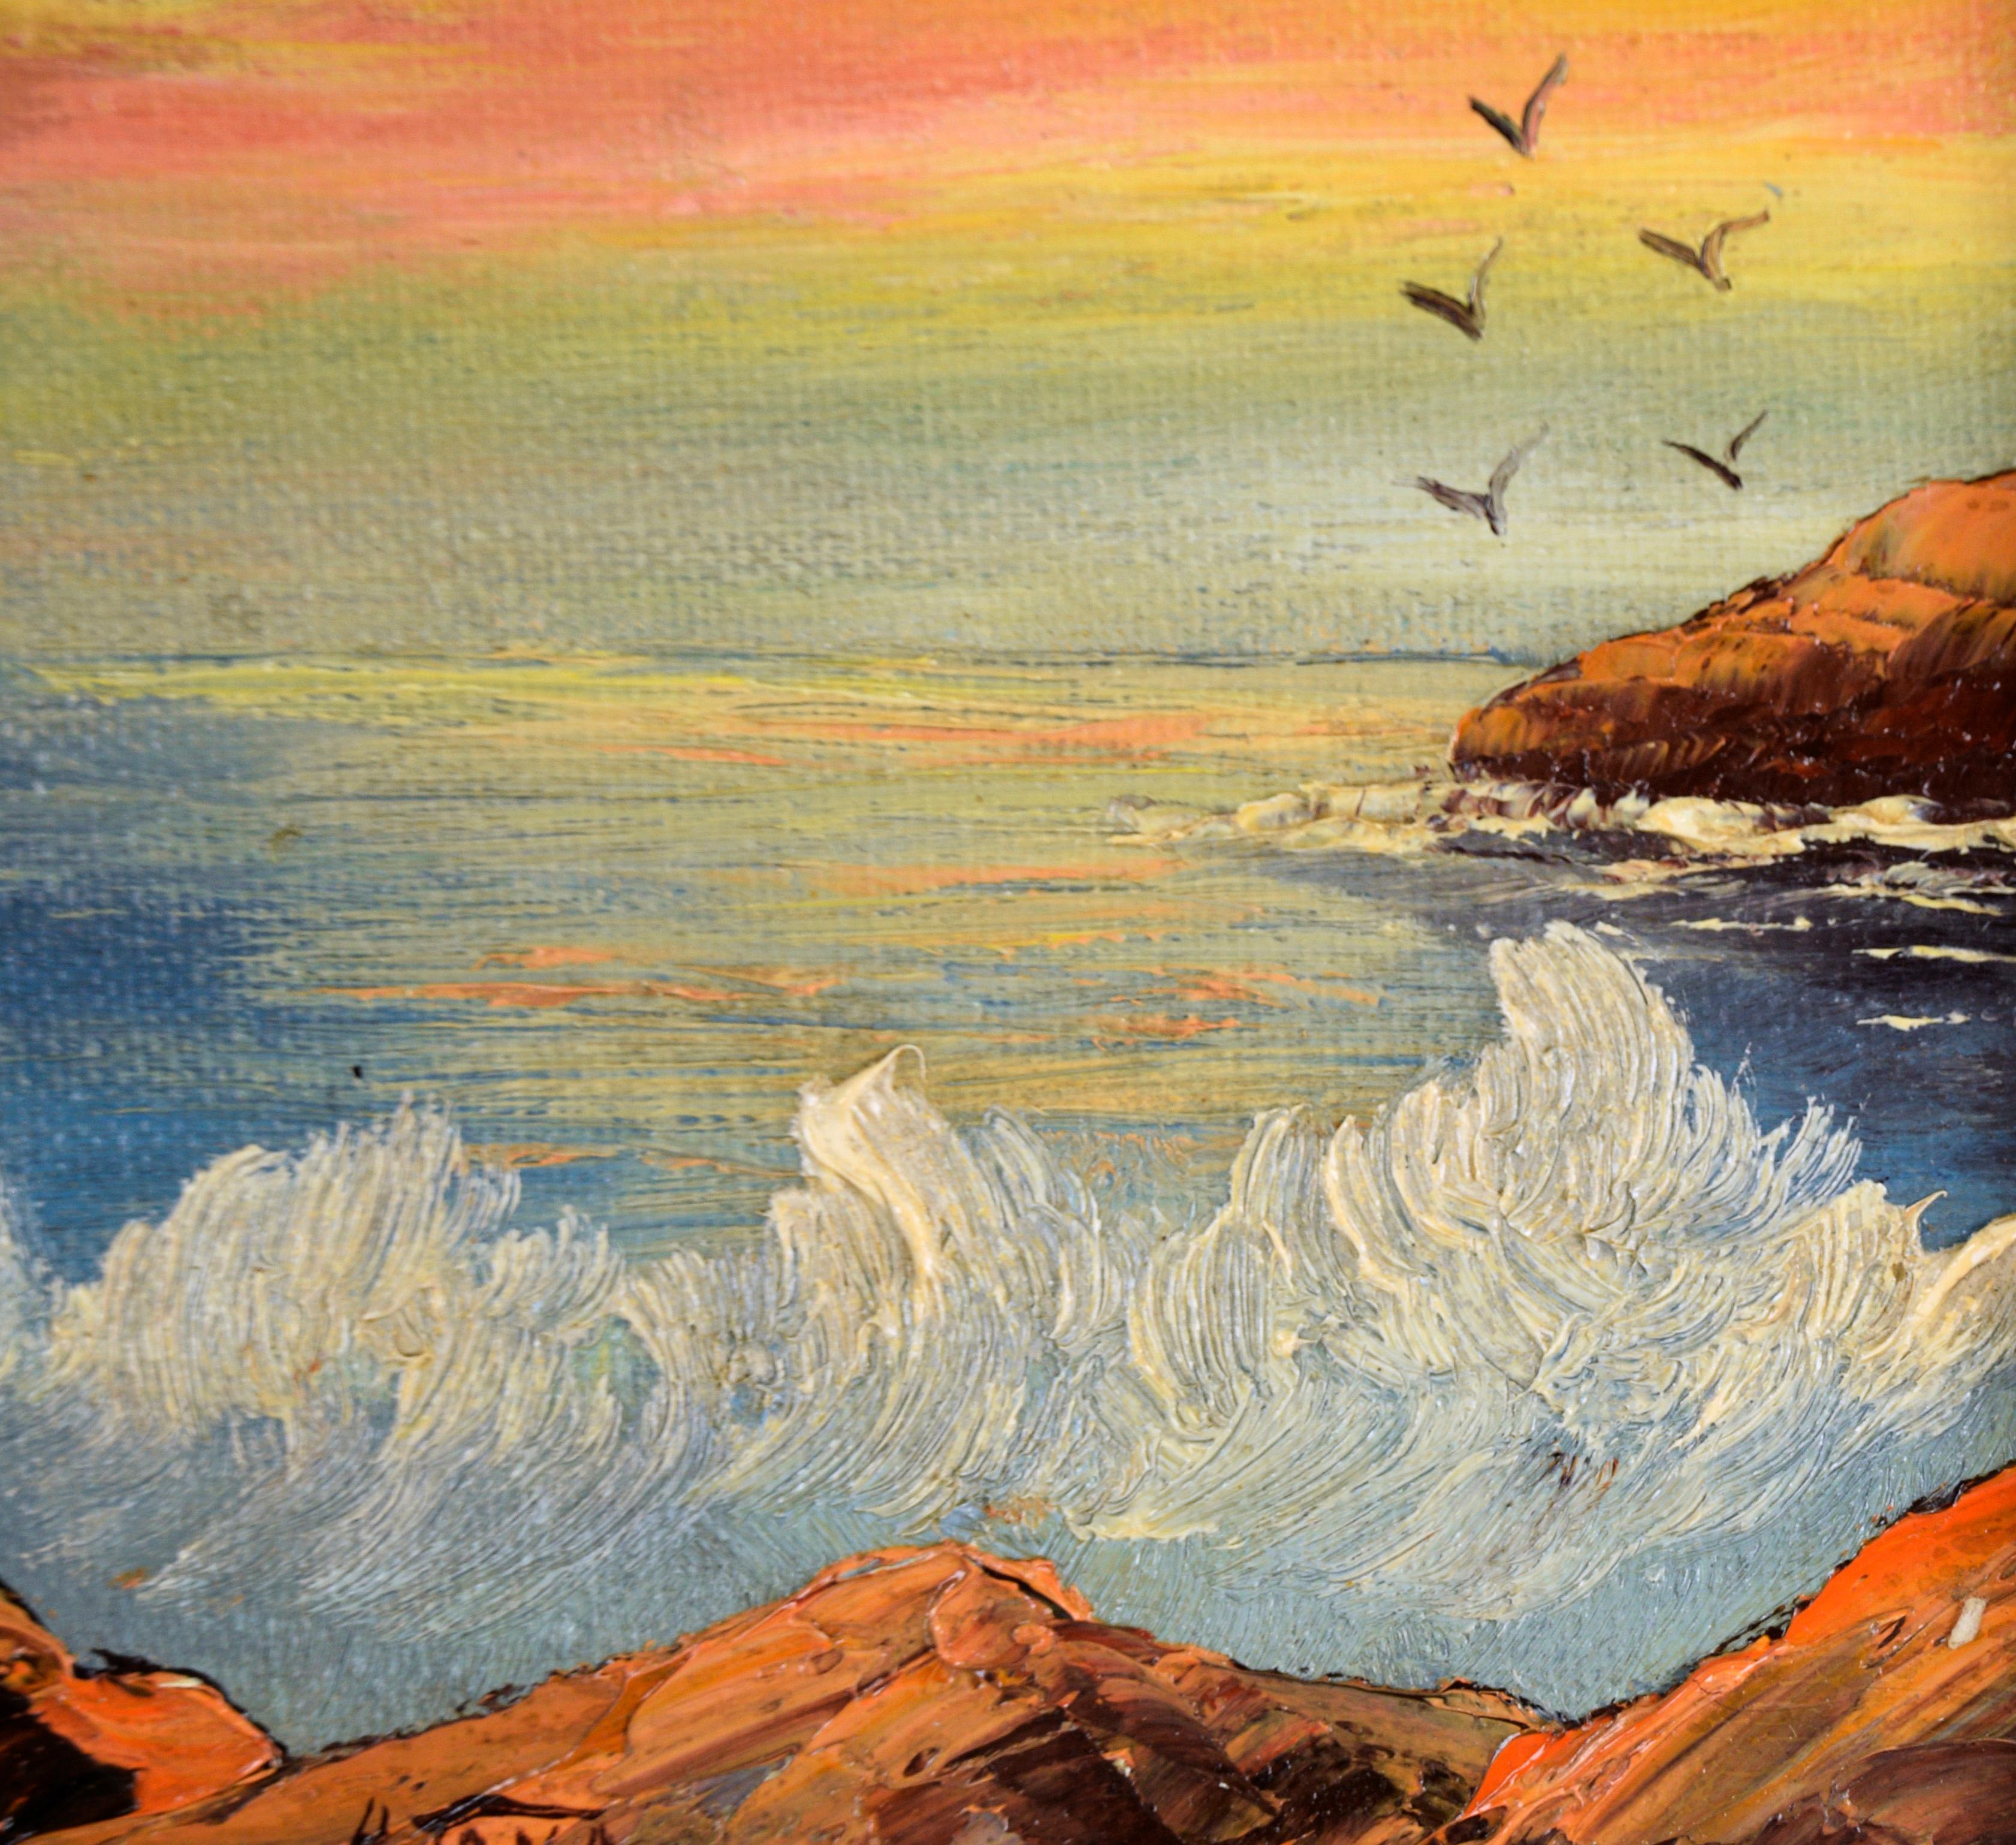 Ocean Splash at Sunset - Small Plein Air Oil Painting on Canvas 3